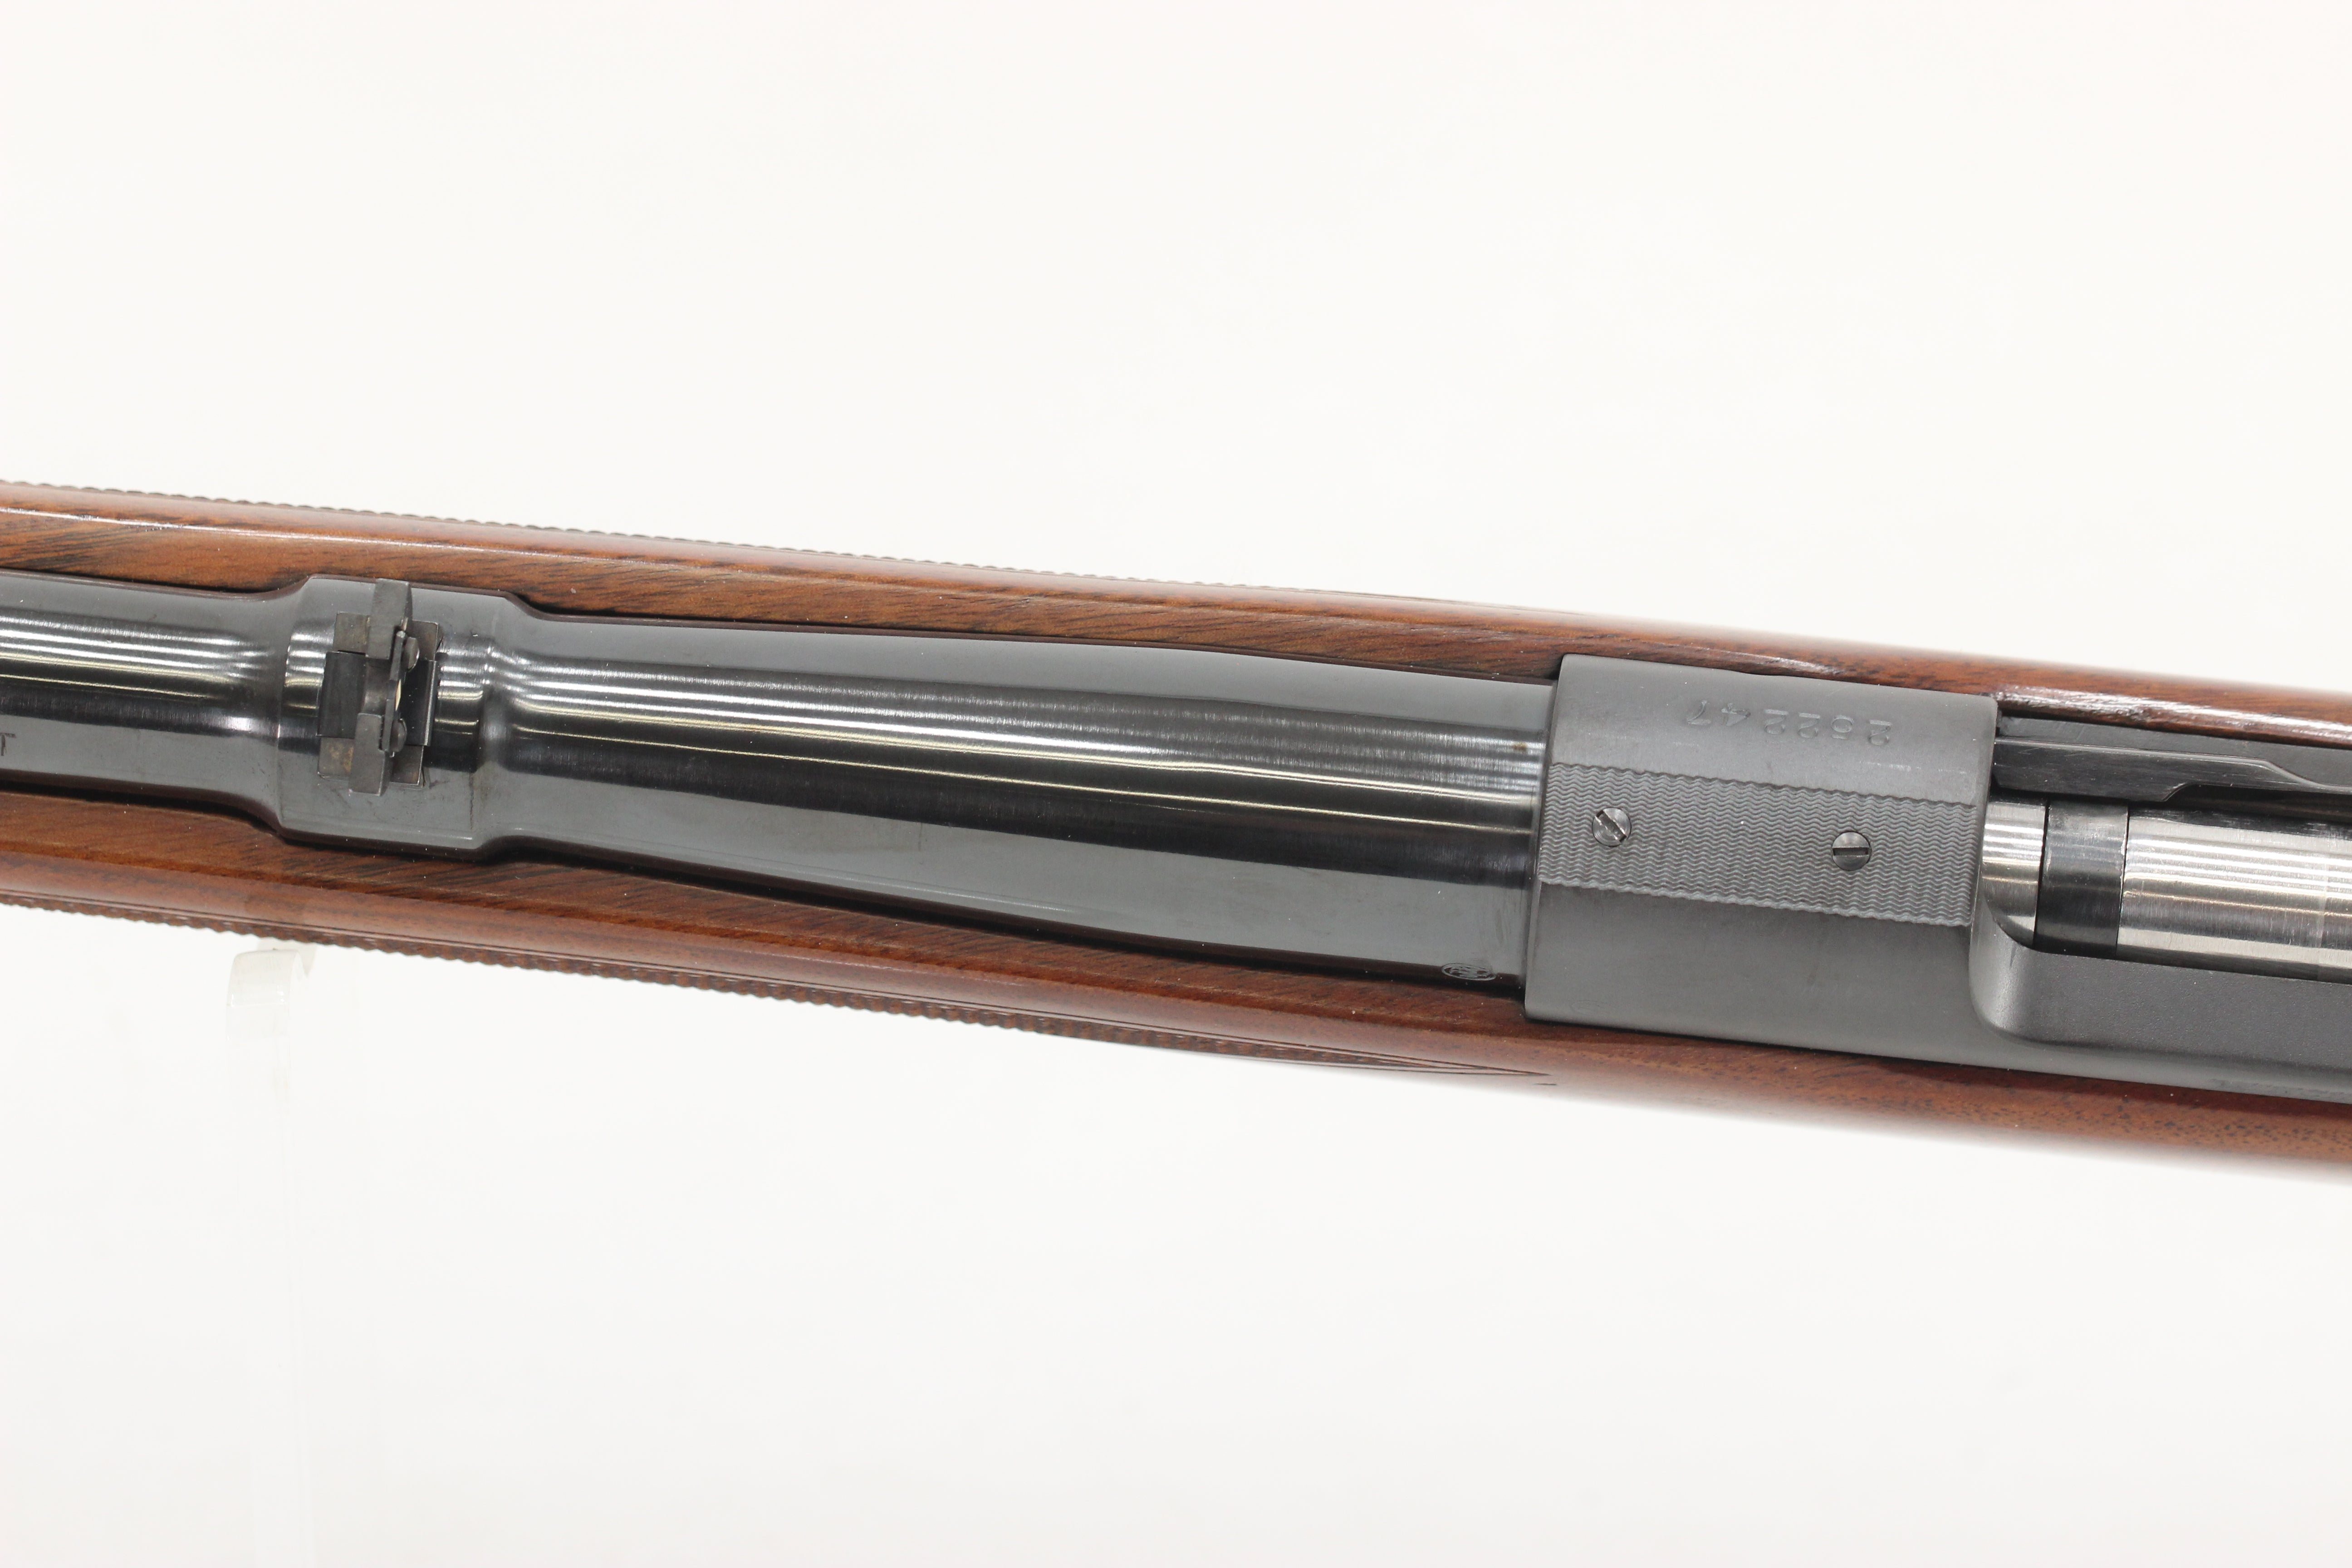 .22 Hornet Standard Rifle - 1953